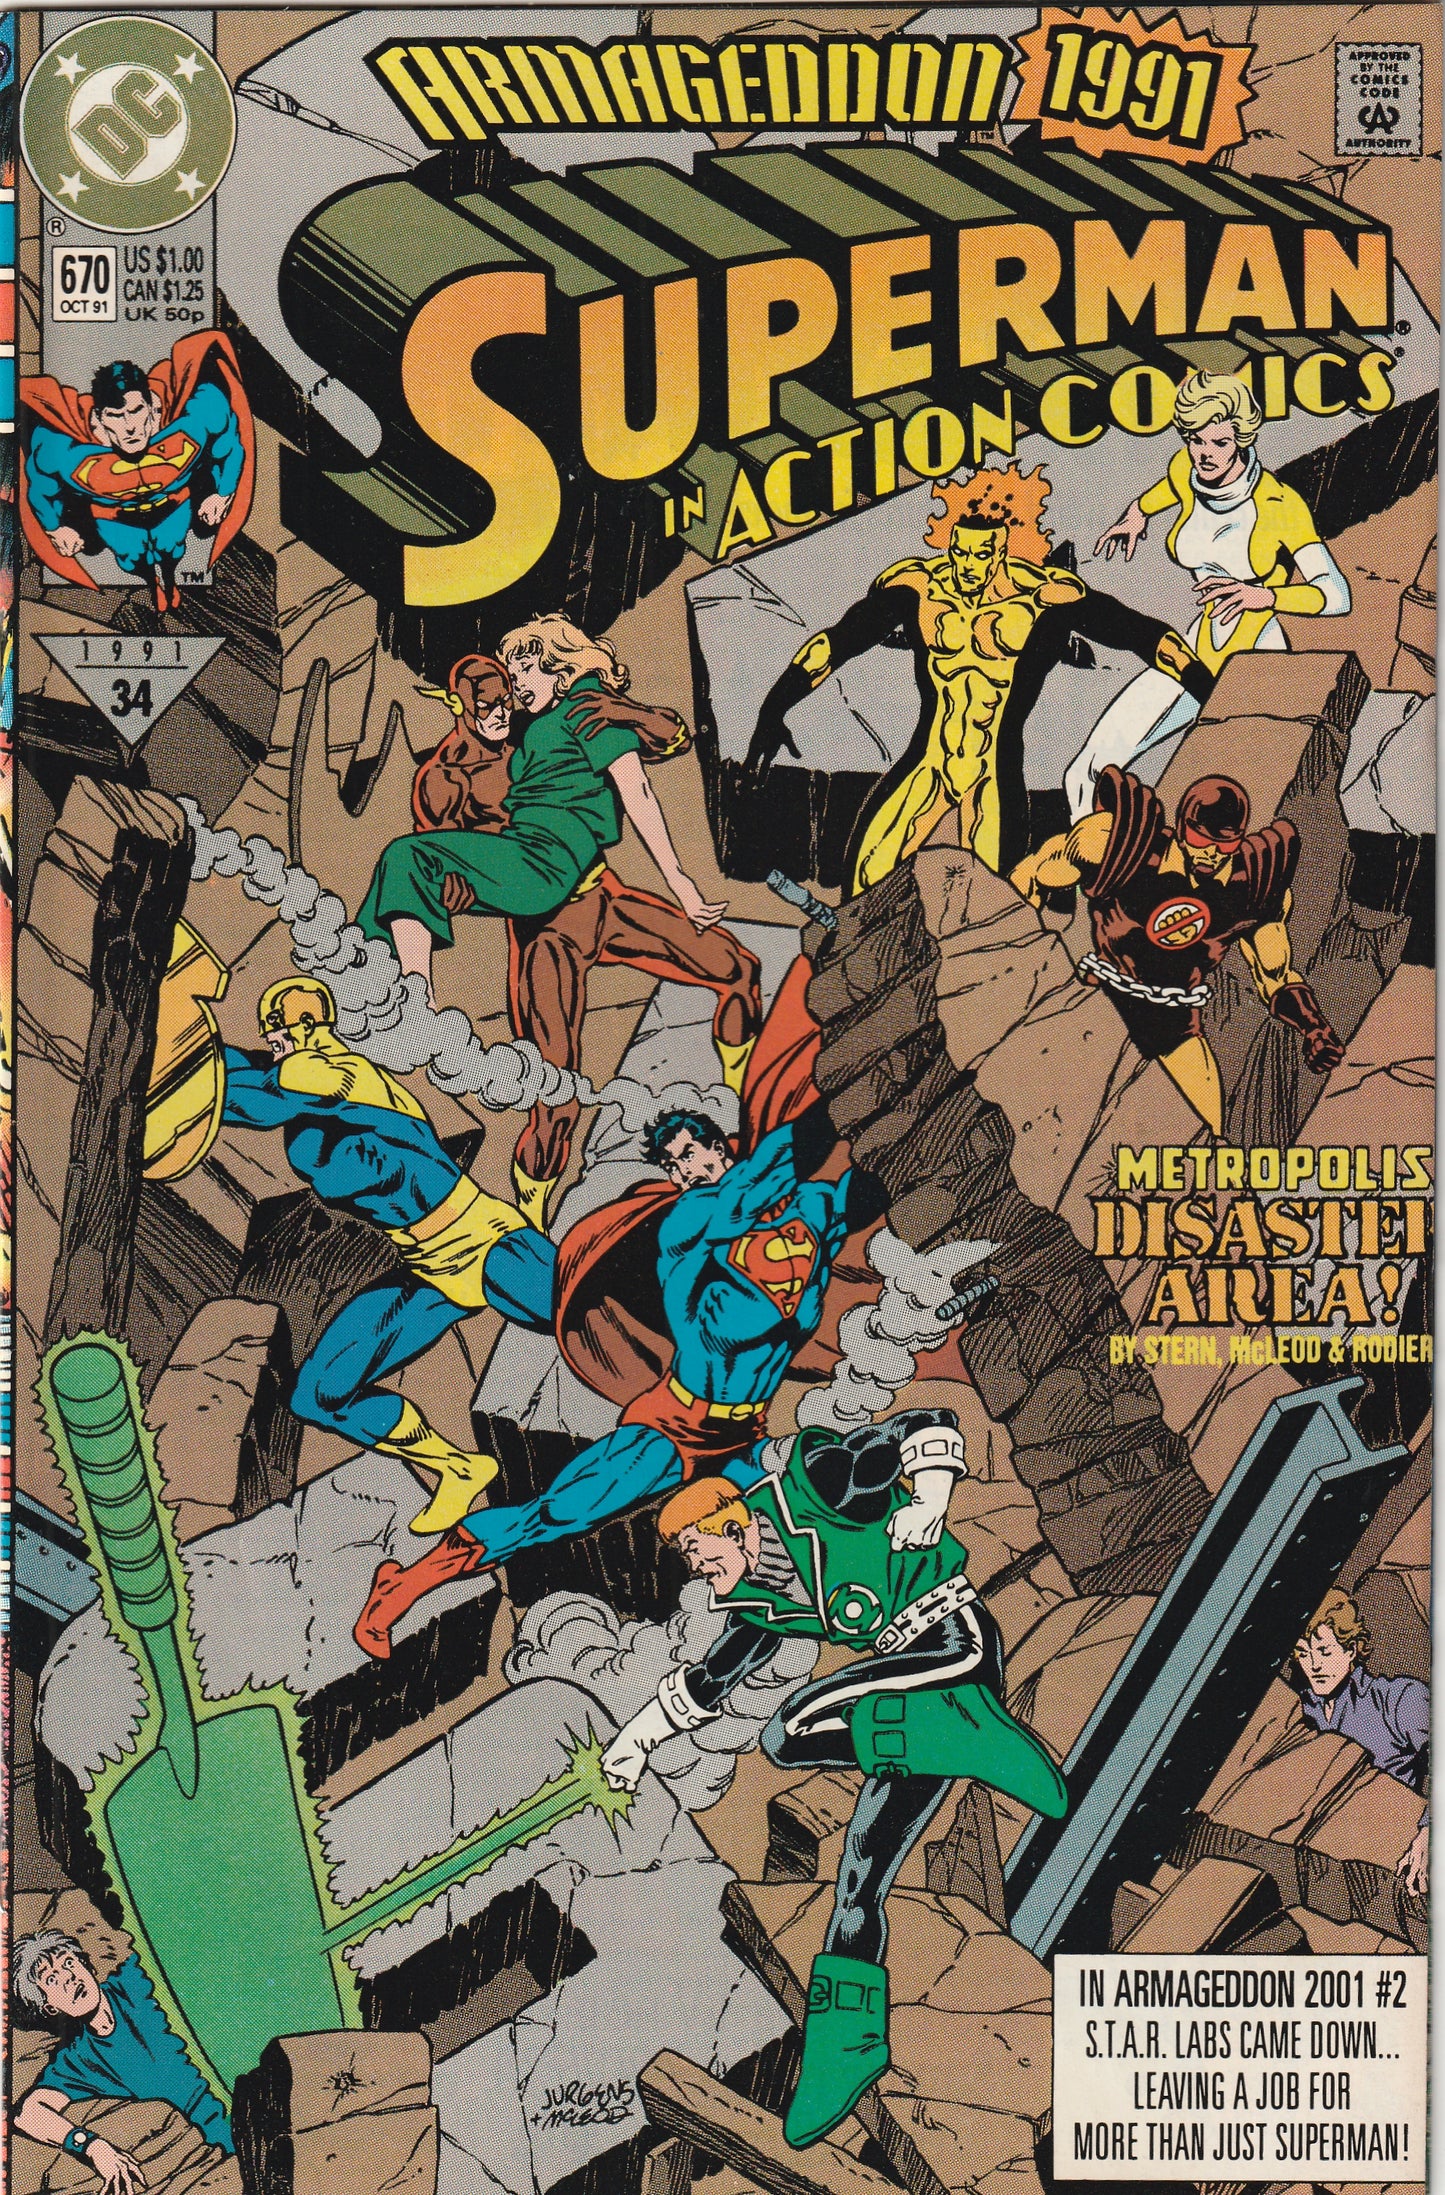 Action Comics #670 (1991) - 1st Appearance of Atomic Skull (Joseph Martin)